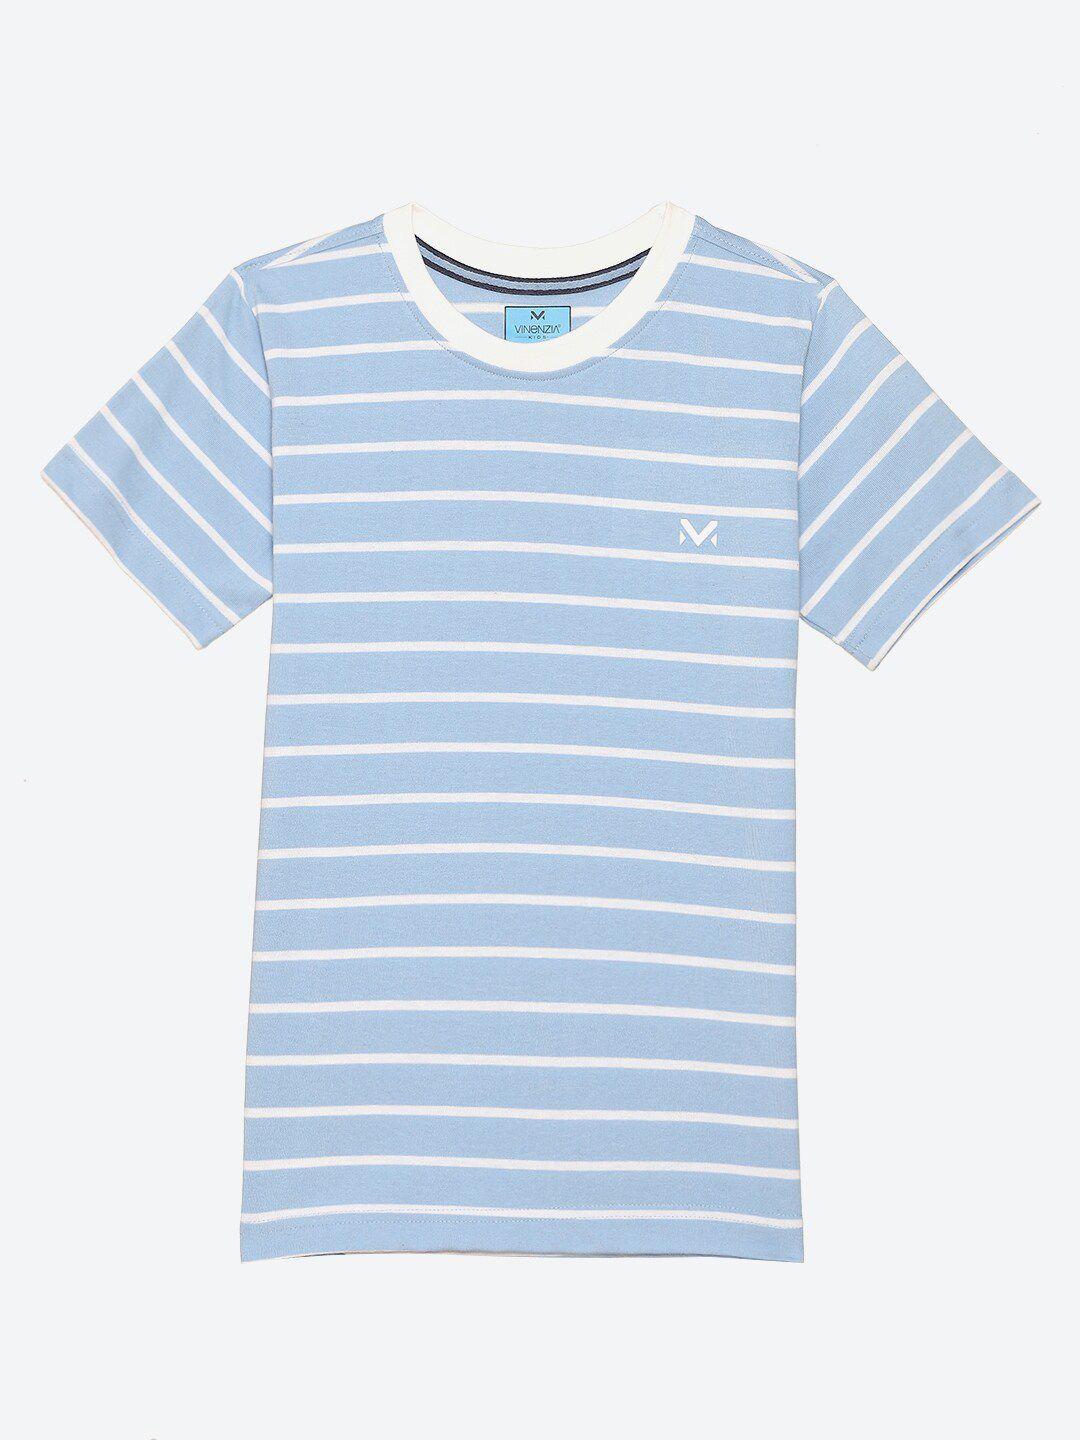 vinenzia-boys-blue-striped-extended-sleeves-t-shirt